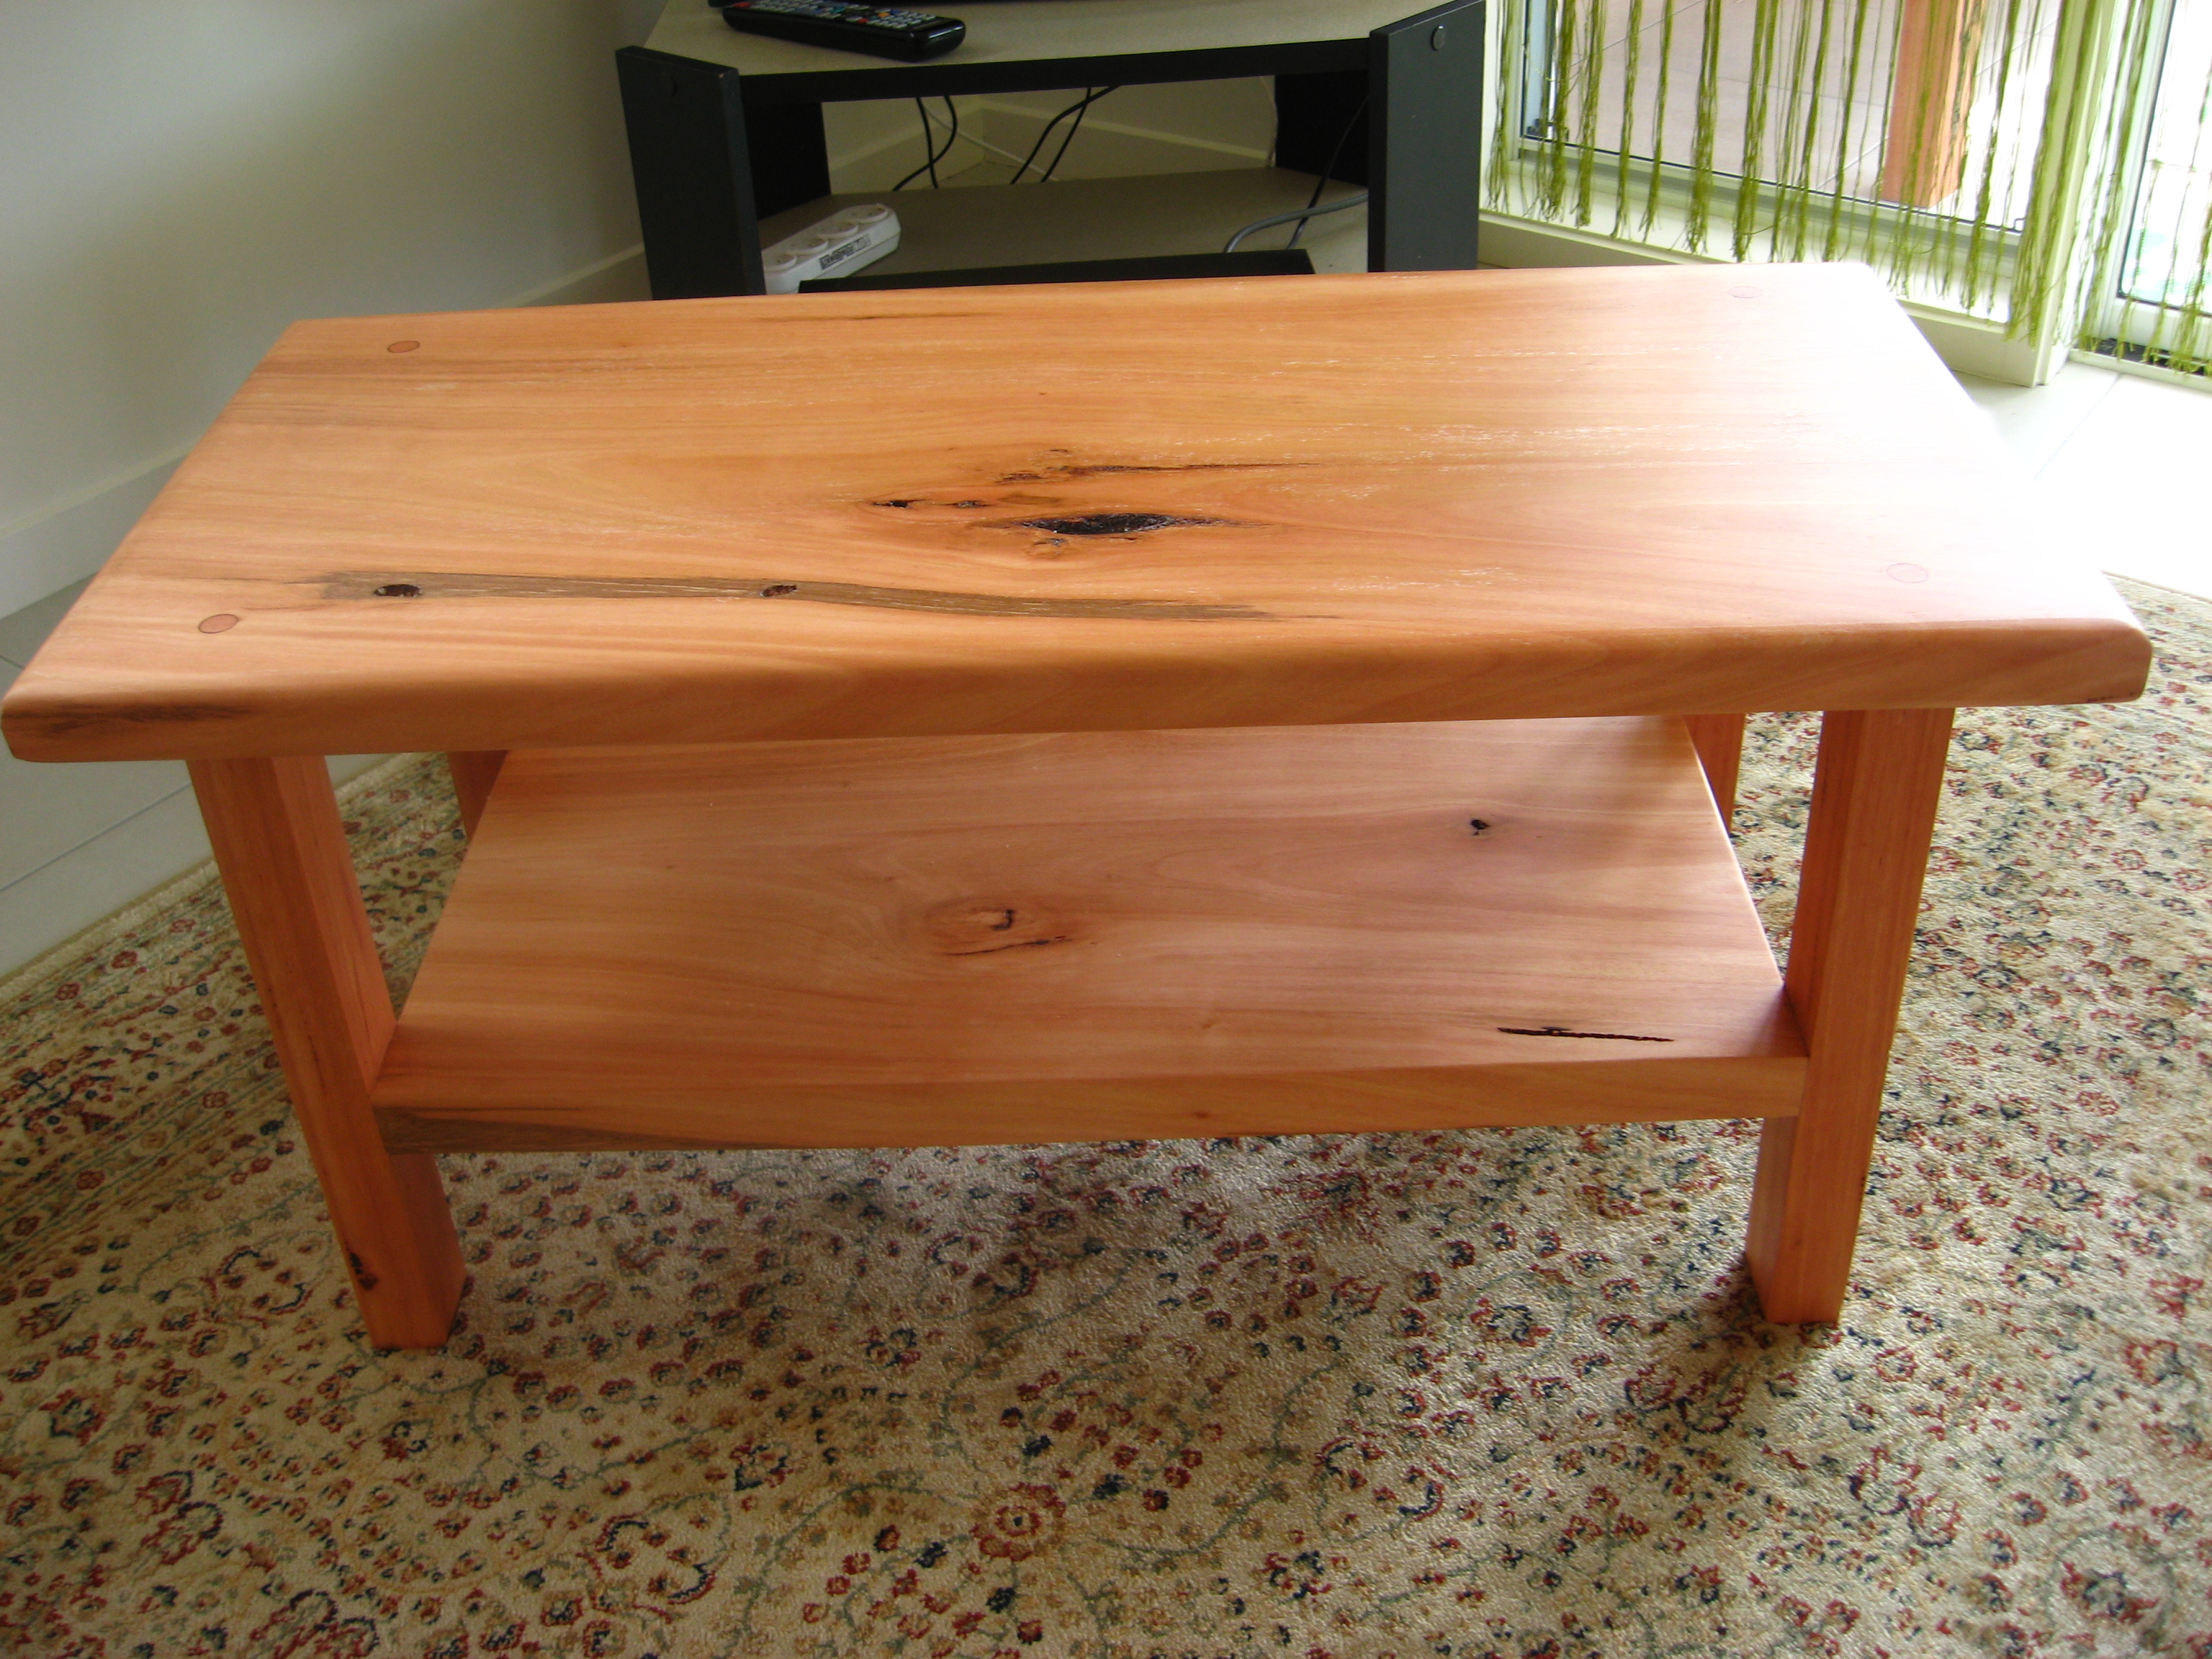 wood table designs plans photo - 8